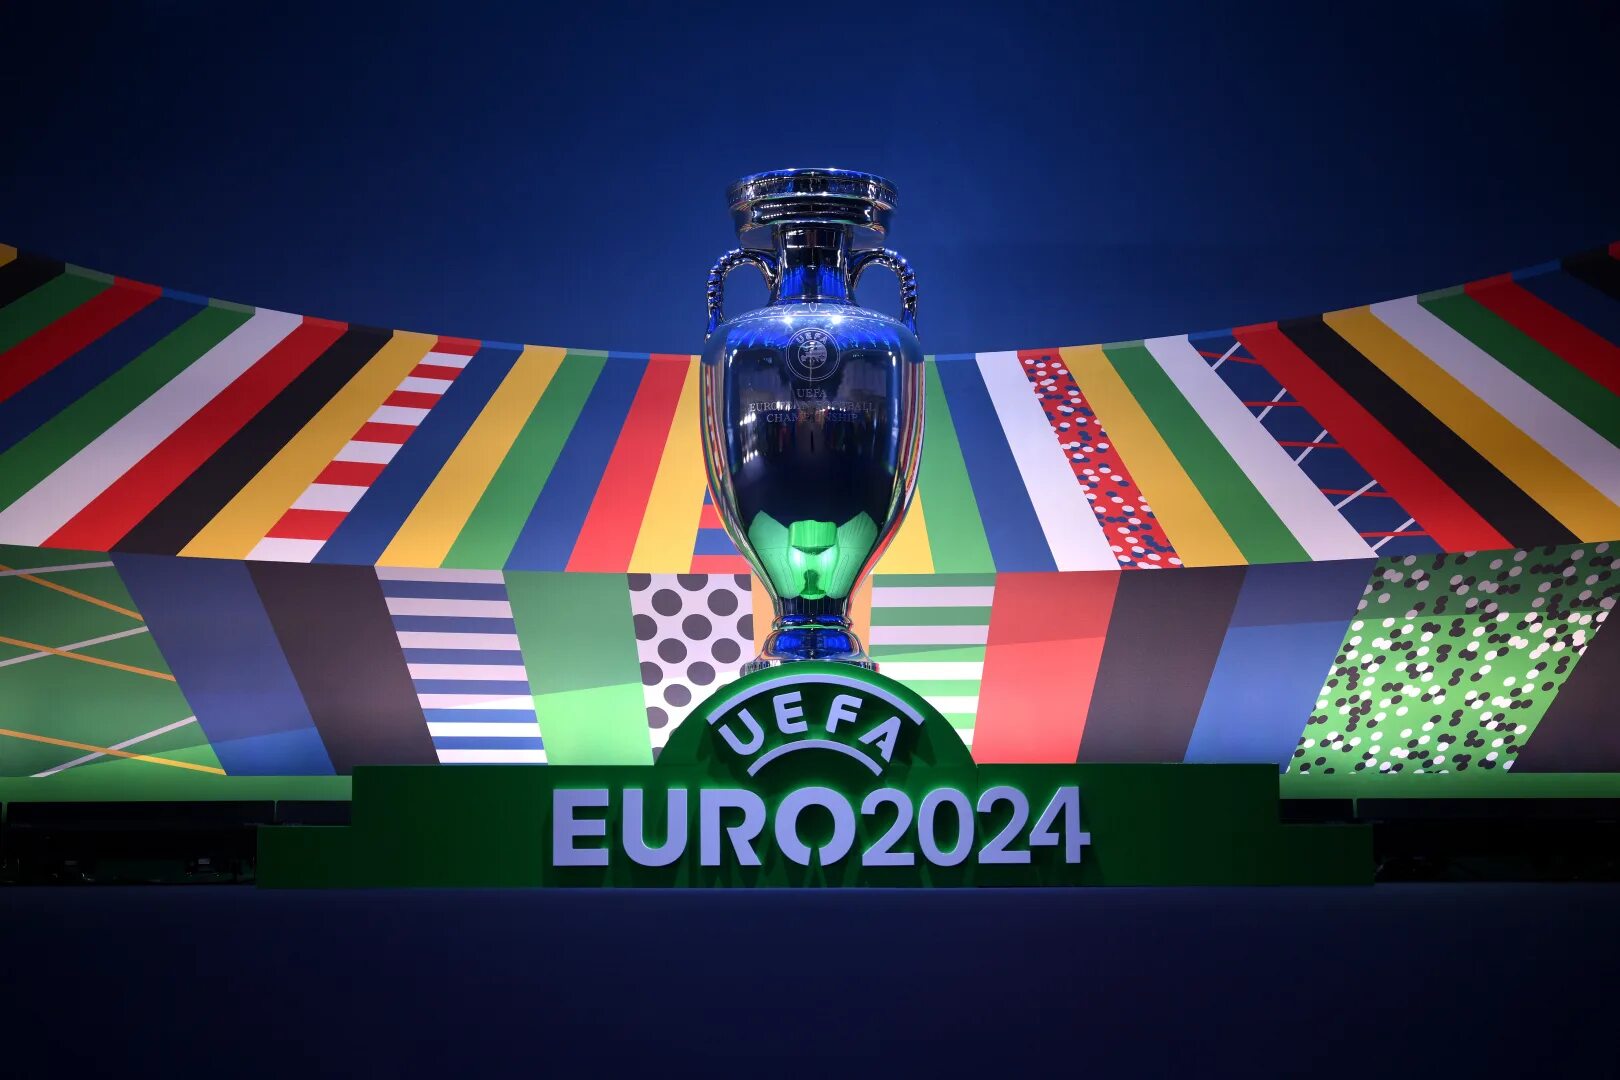 Euro 2024. Кубок евро 2024. Жеребьевка евро 2024. Германия 2024. Участники чемпионата европы по футболу 2024